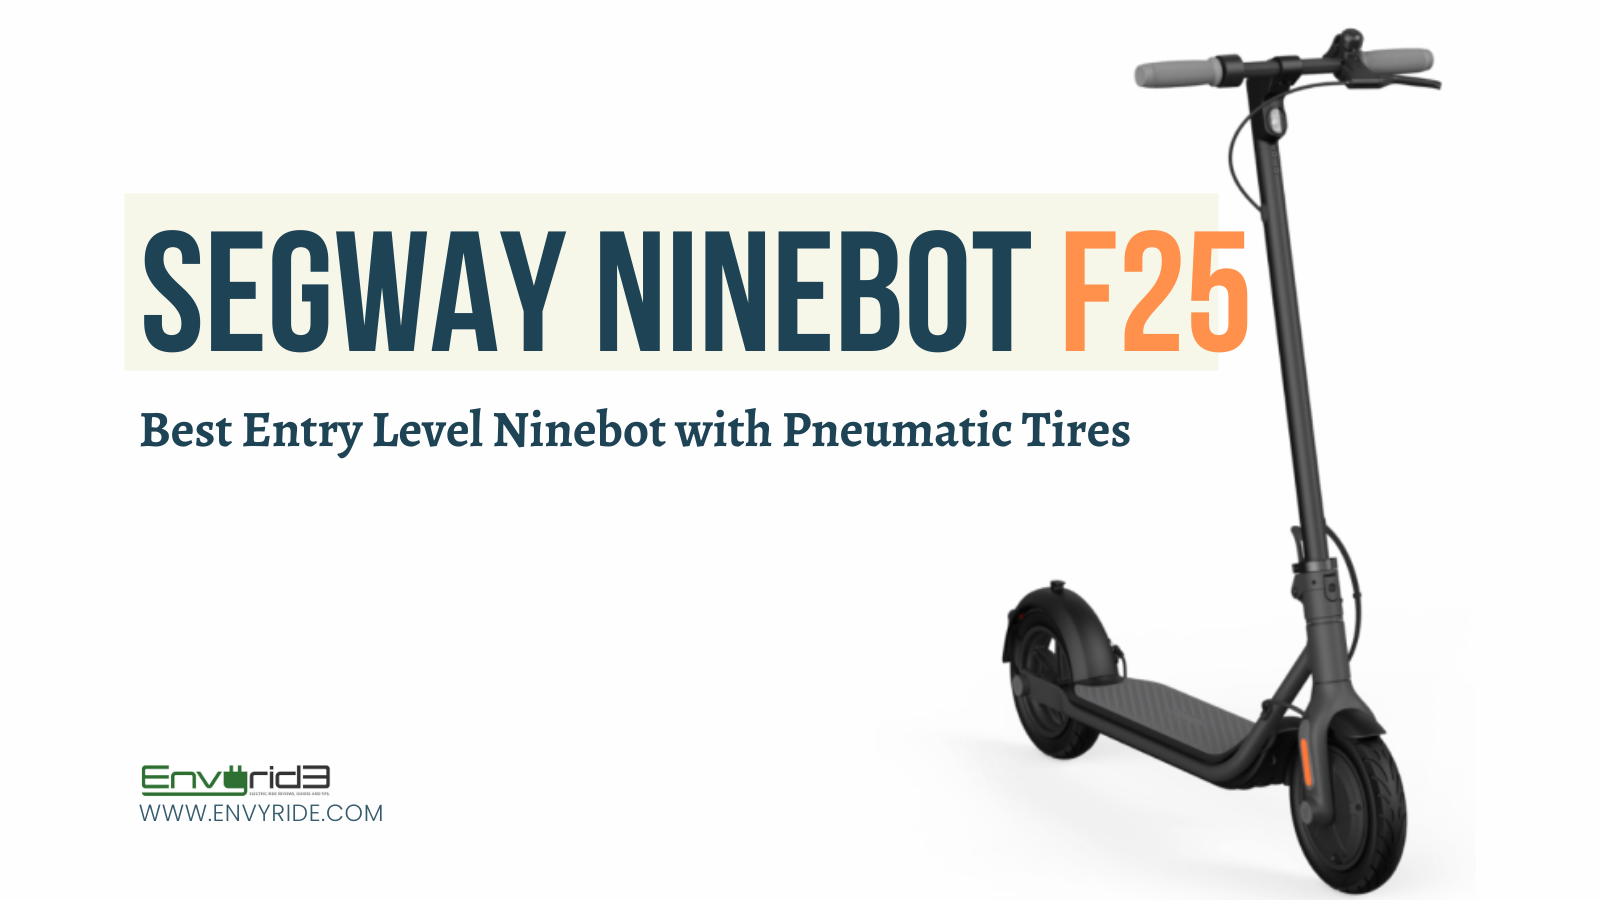 Segway Ninebot F25